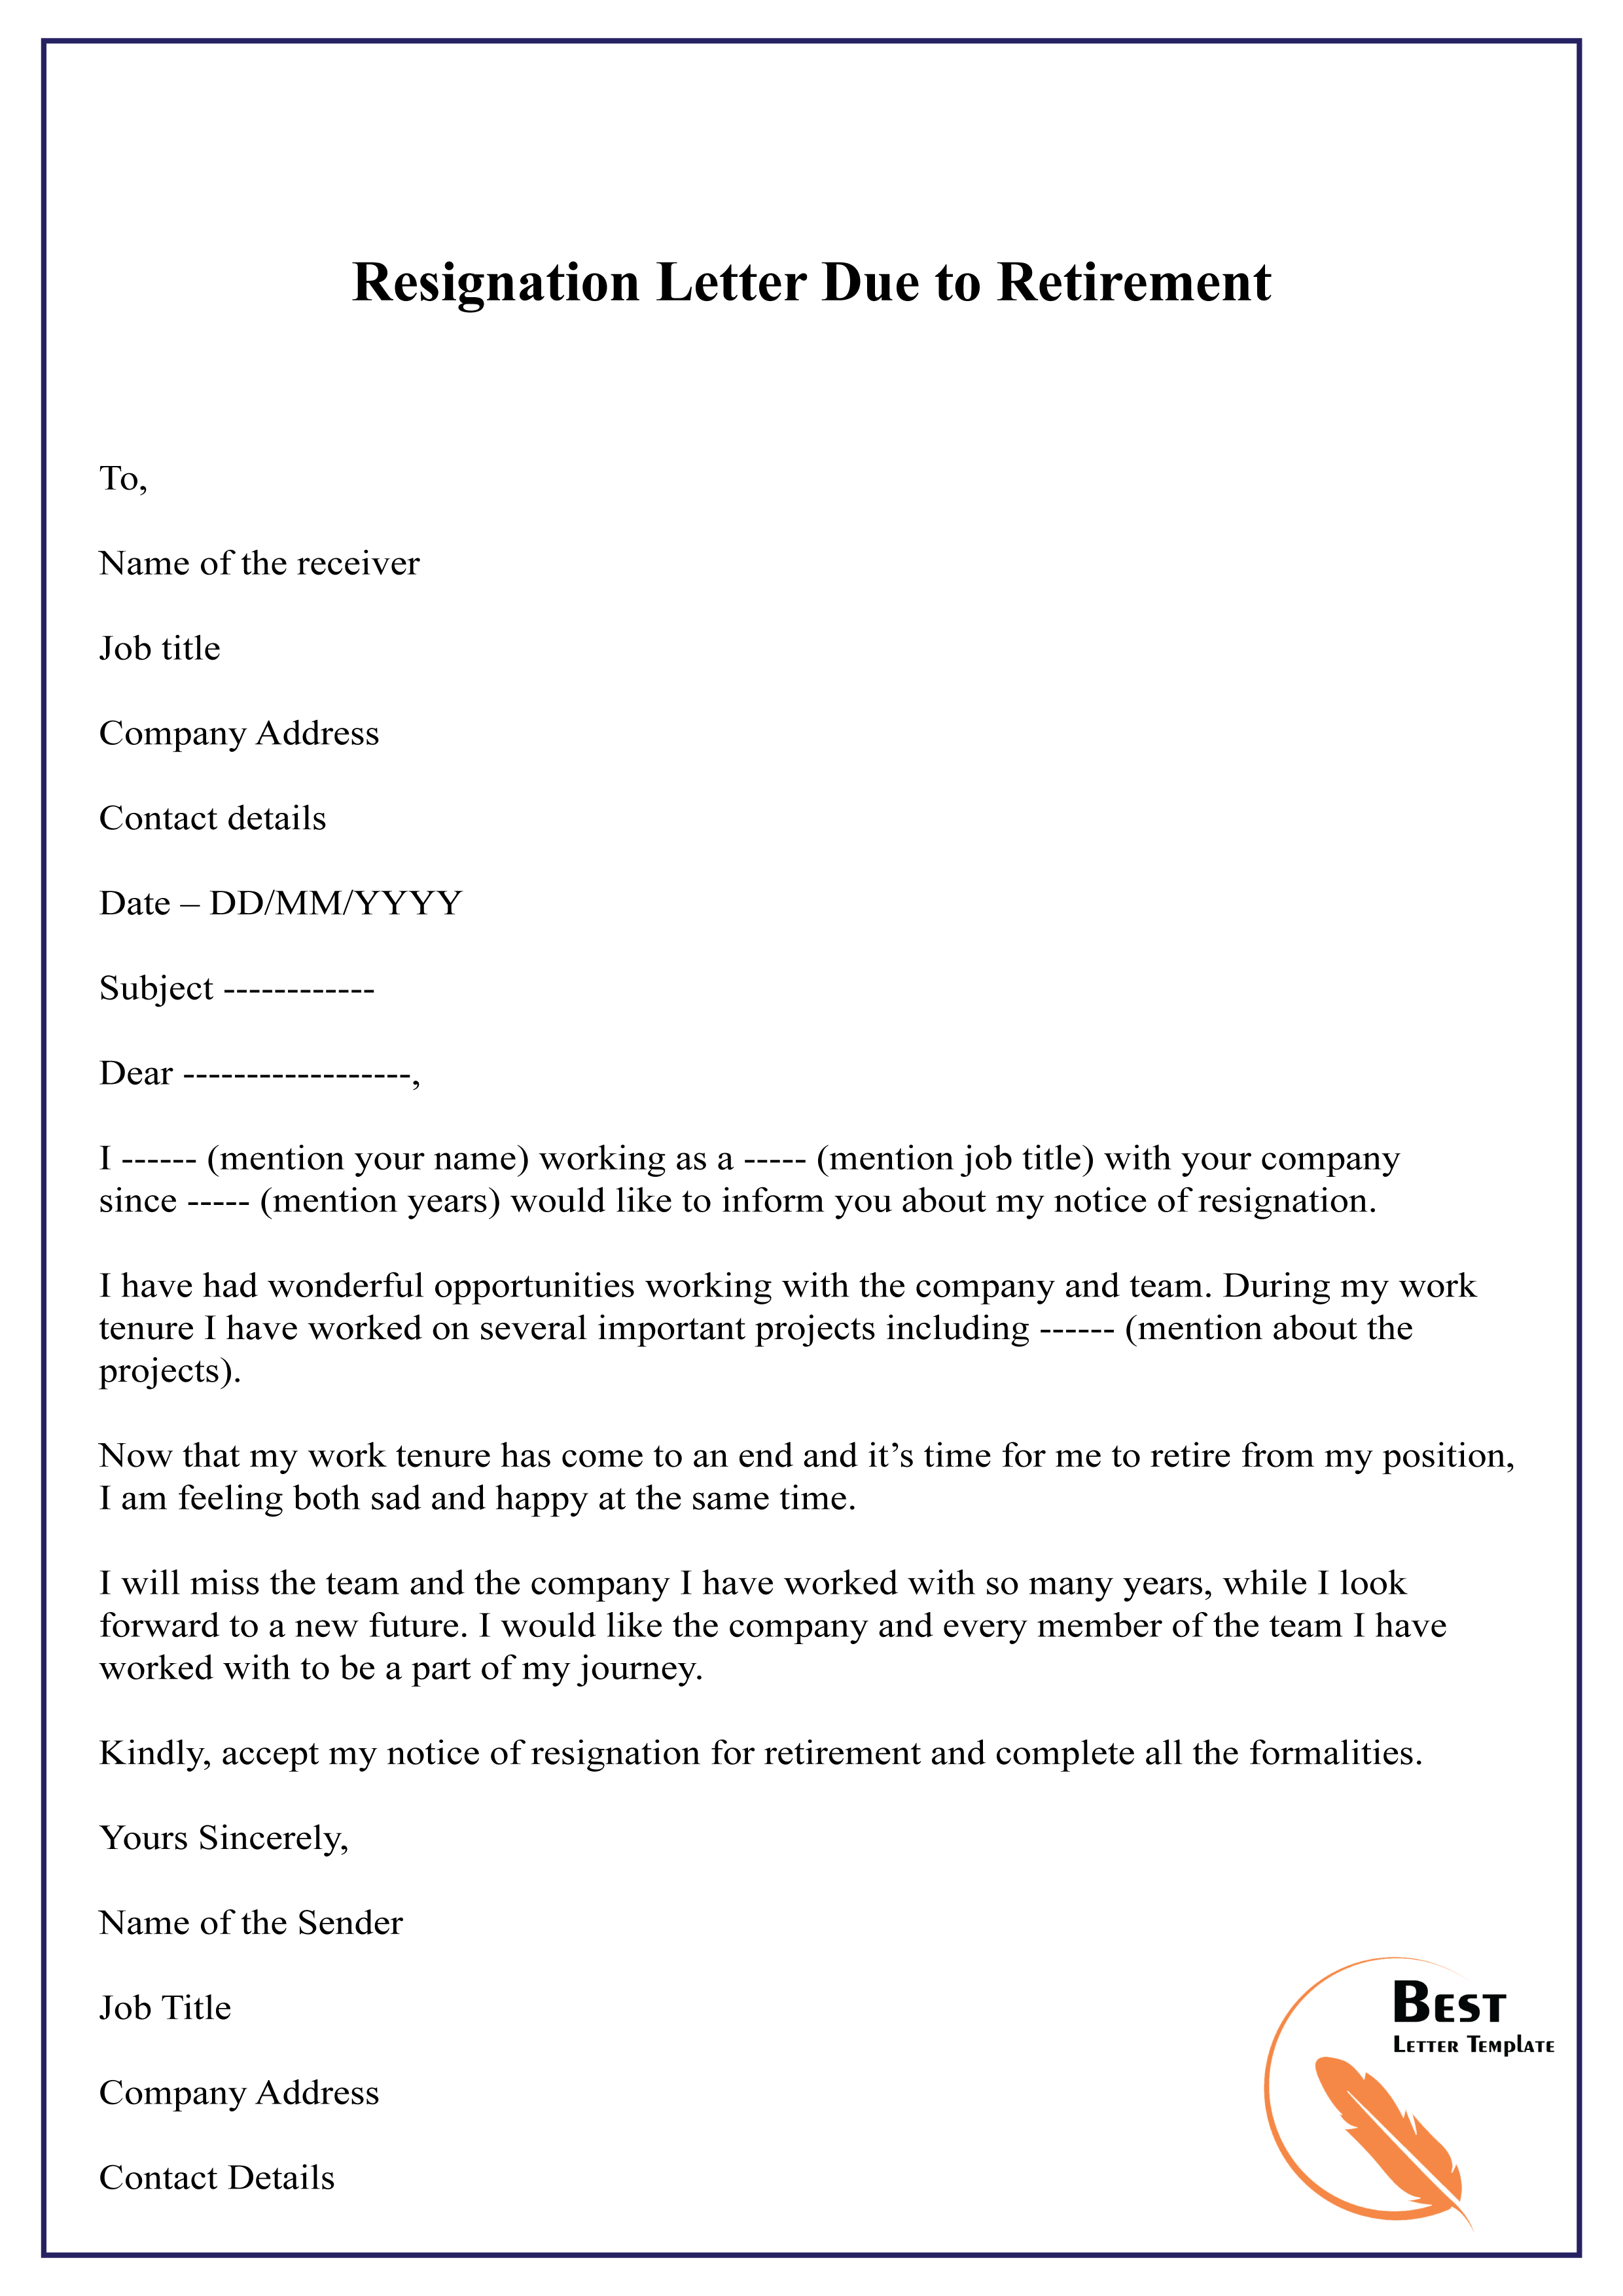 Resignation Letter Due to Retirement01 Best Letter Template